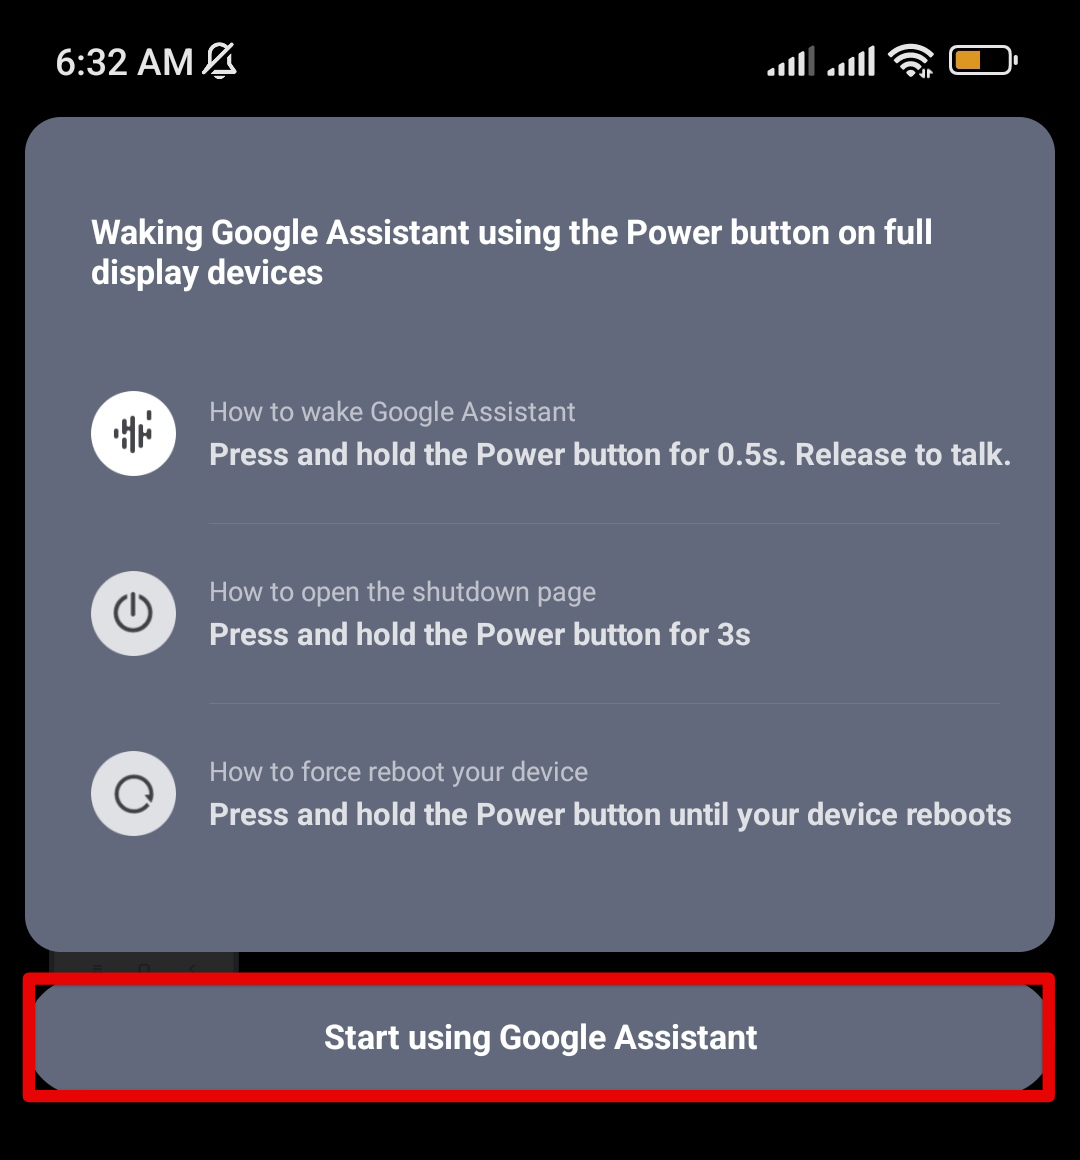 Start using Google Assistant